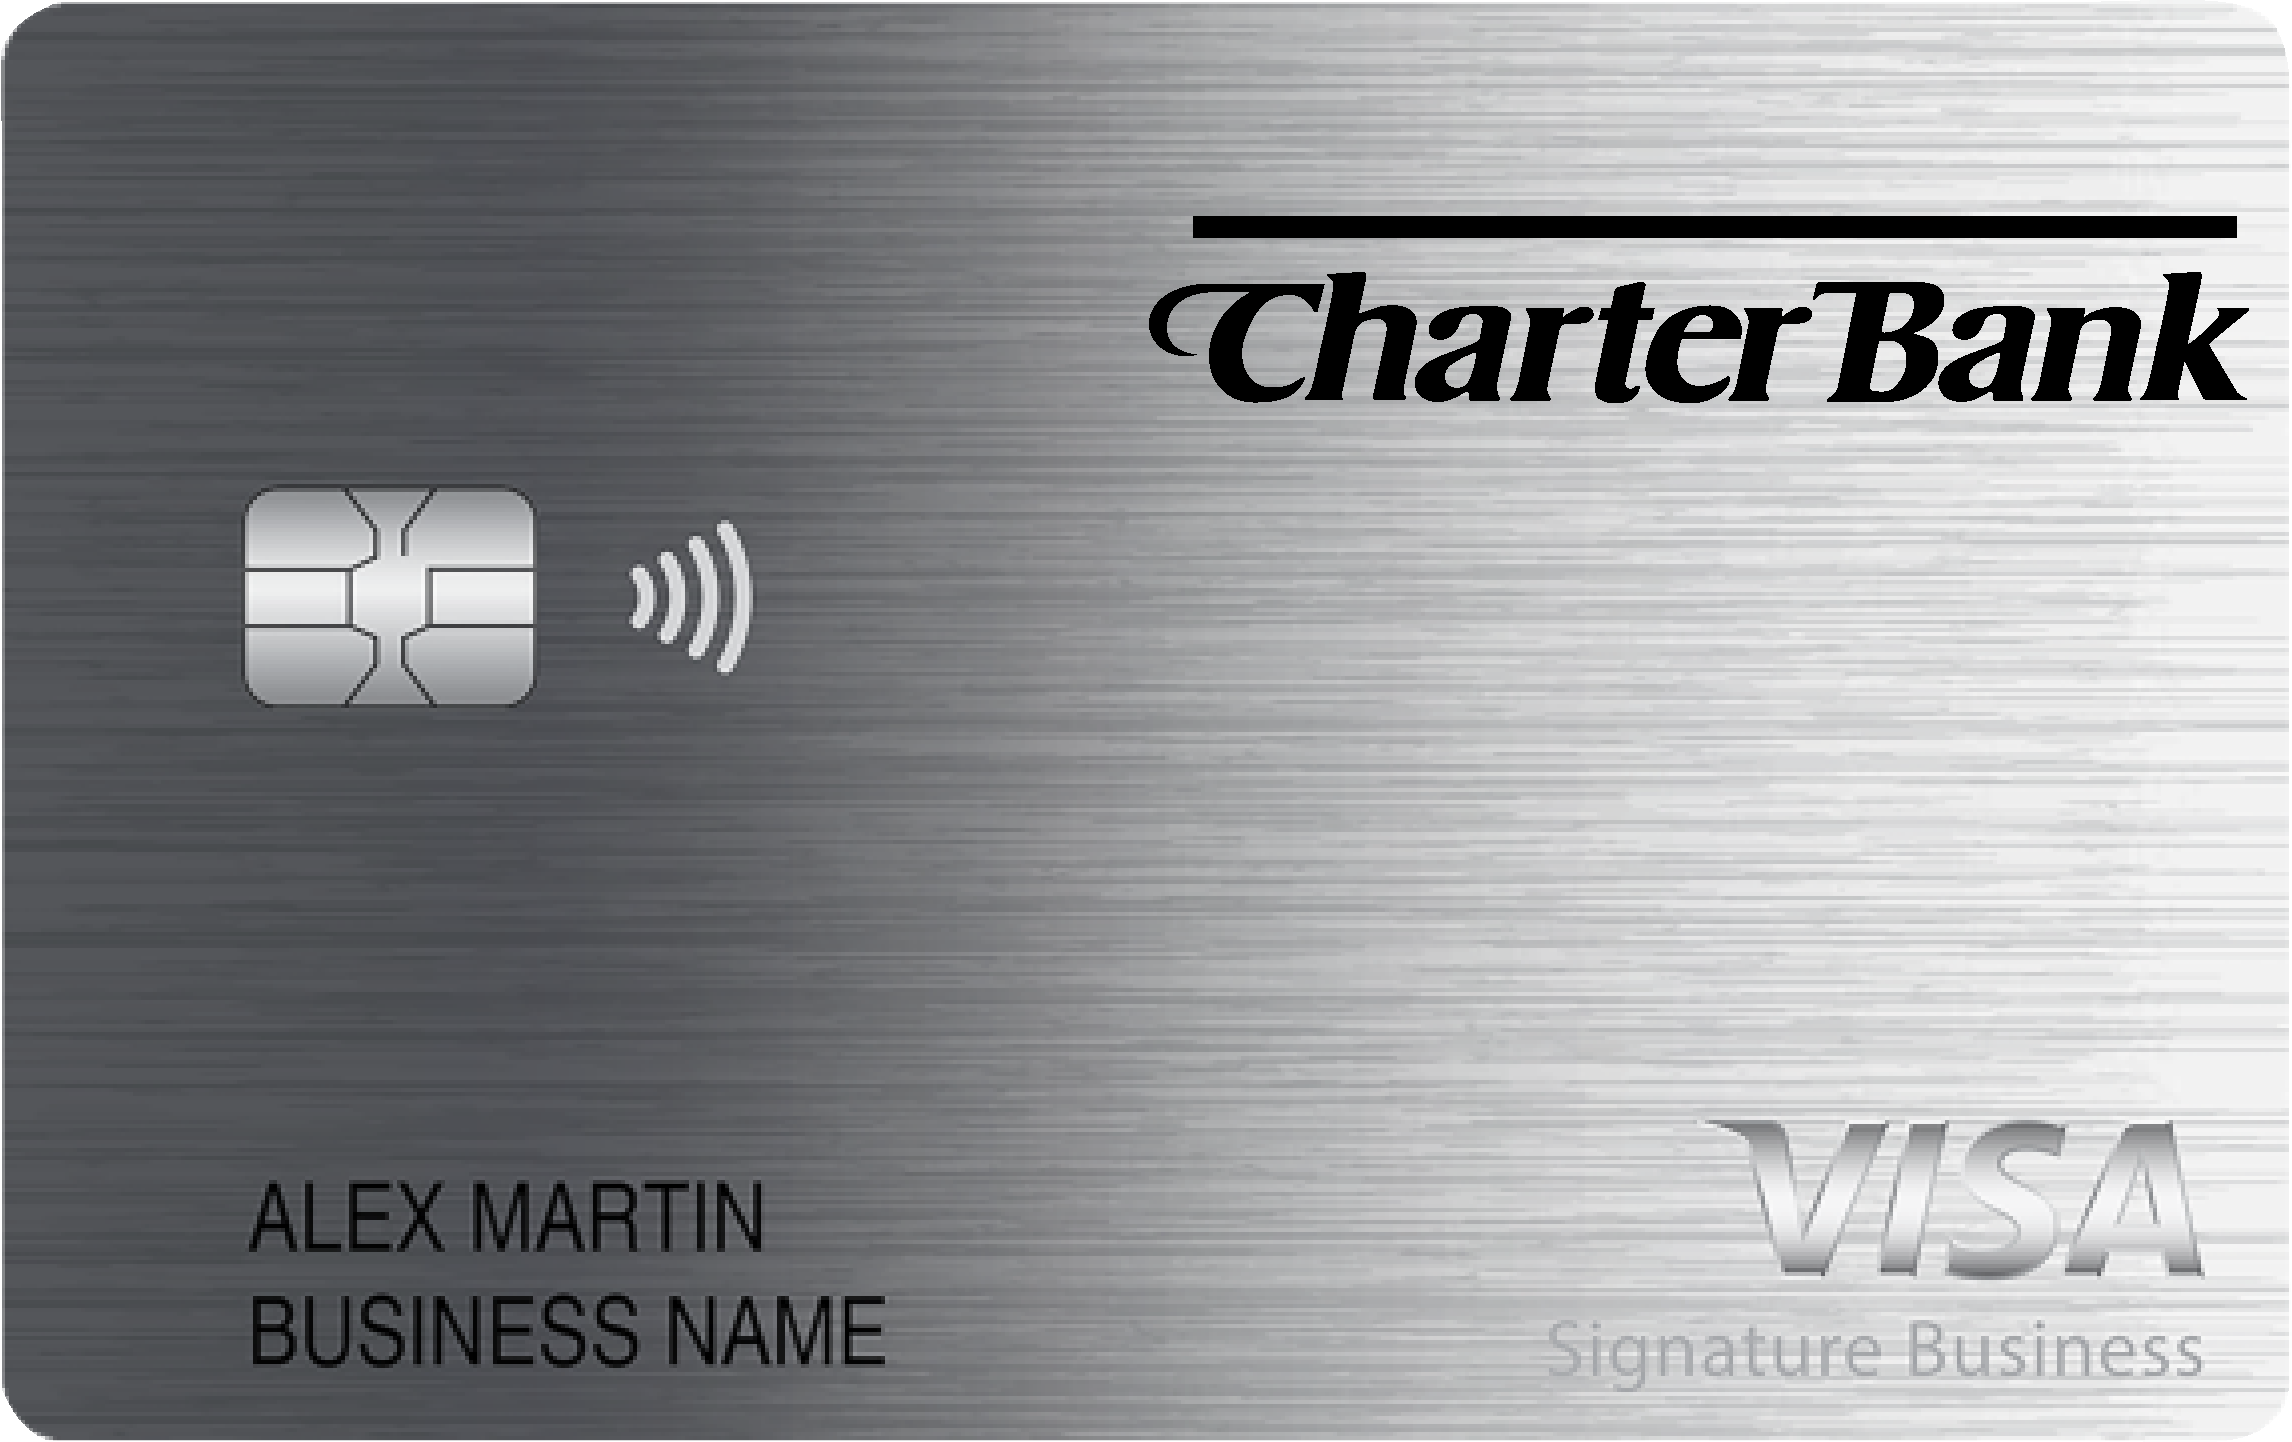 Charter Bank Smart Business Rewards Card